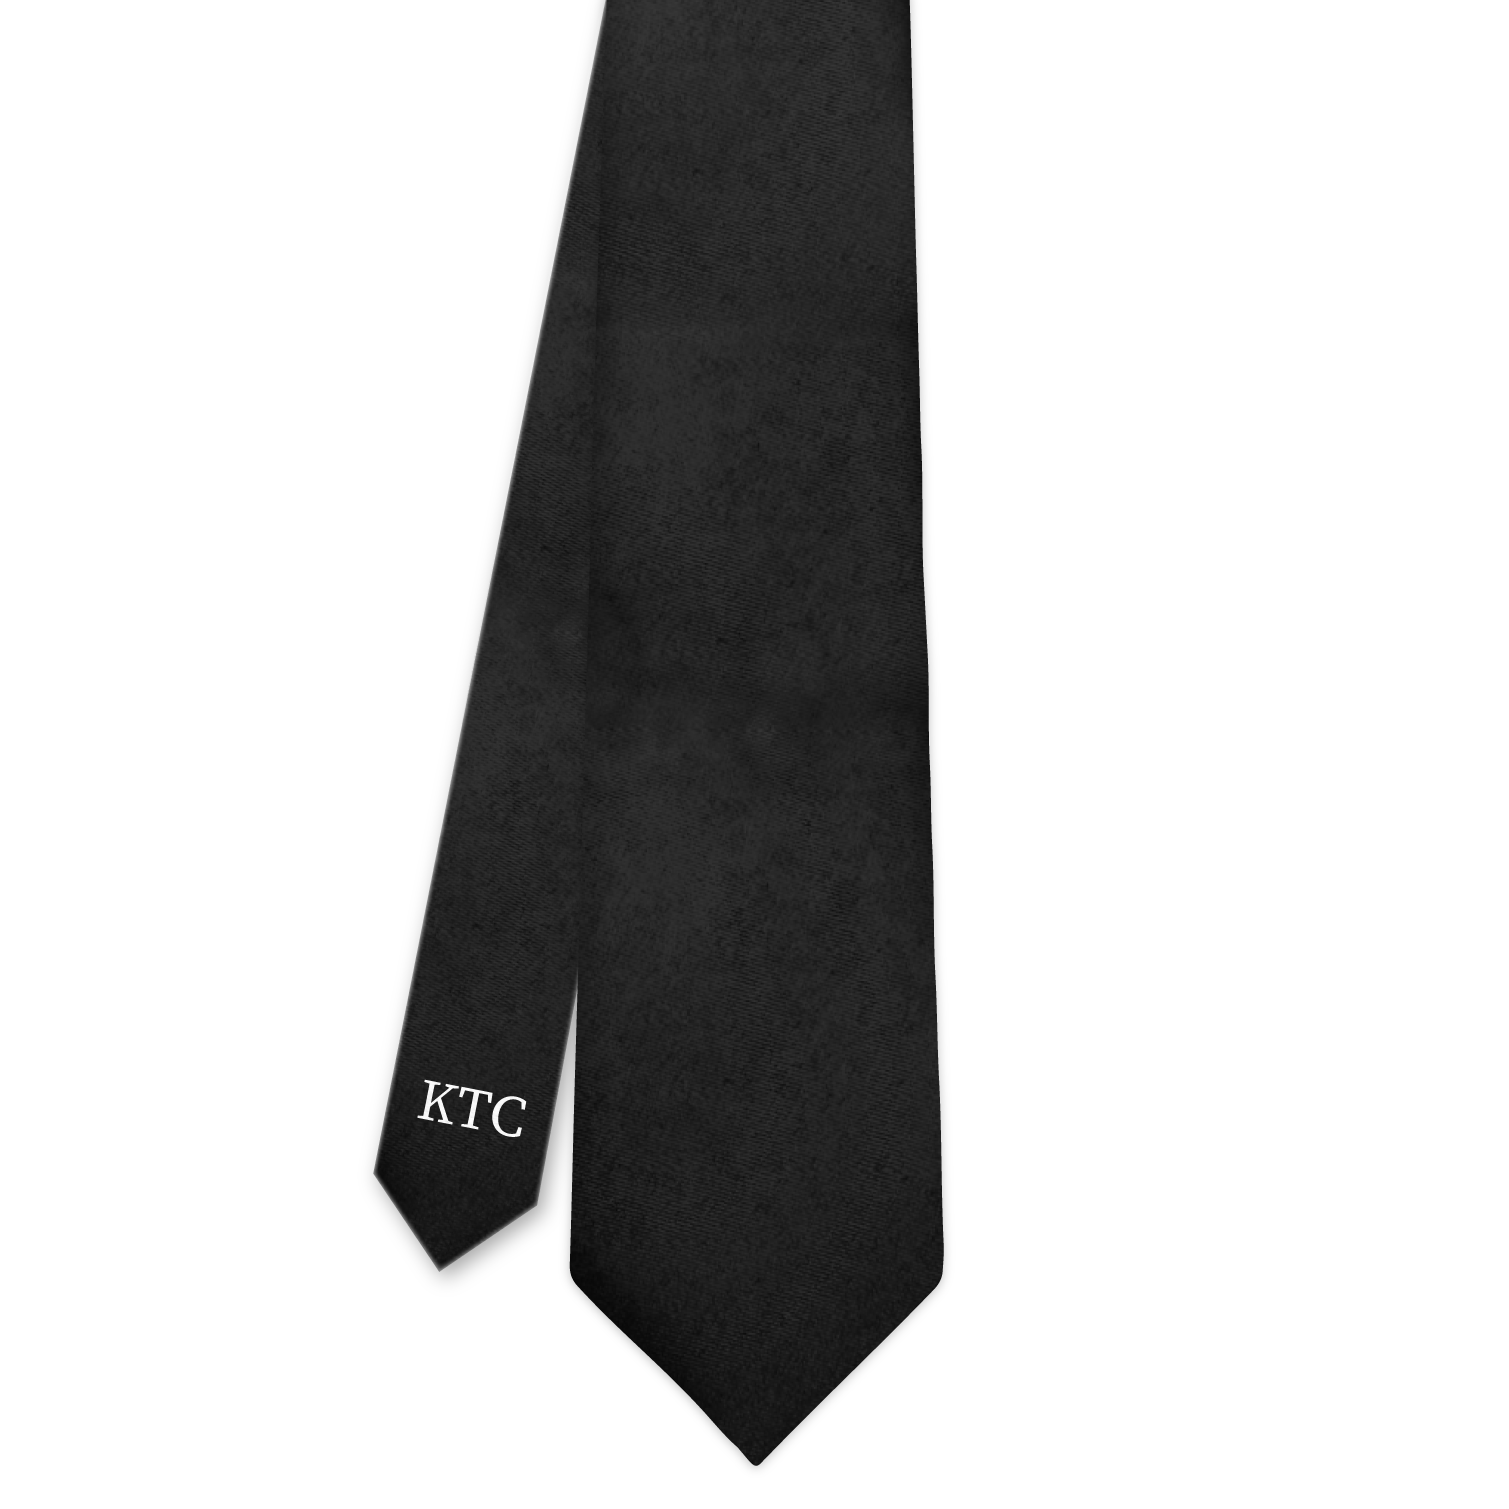 Serif (Initials on Tail) Monogram Necktie - Knotty 2.75" -  - Knotty Tie Co.